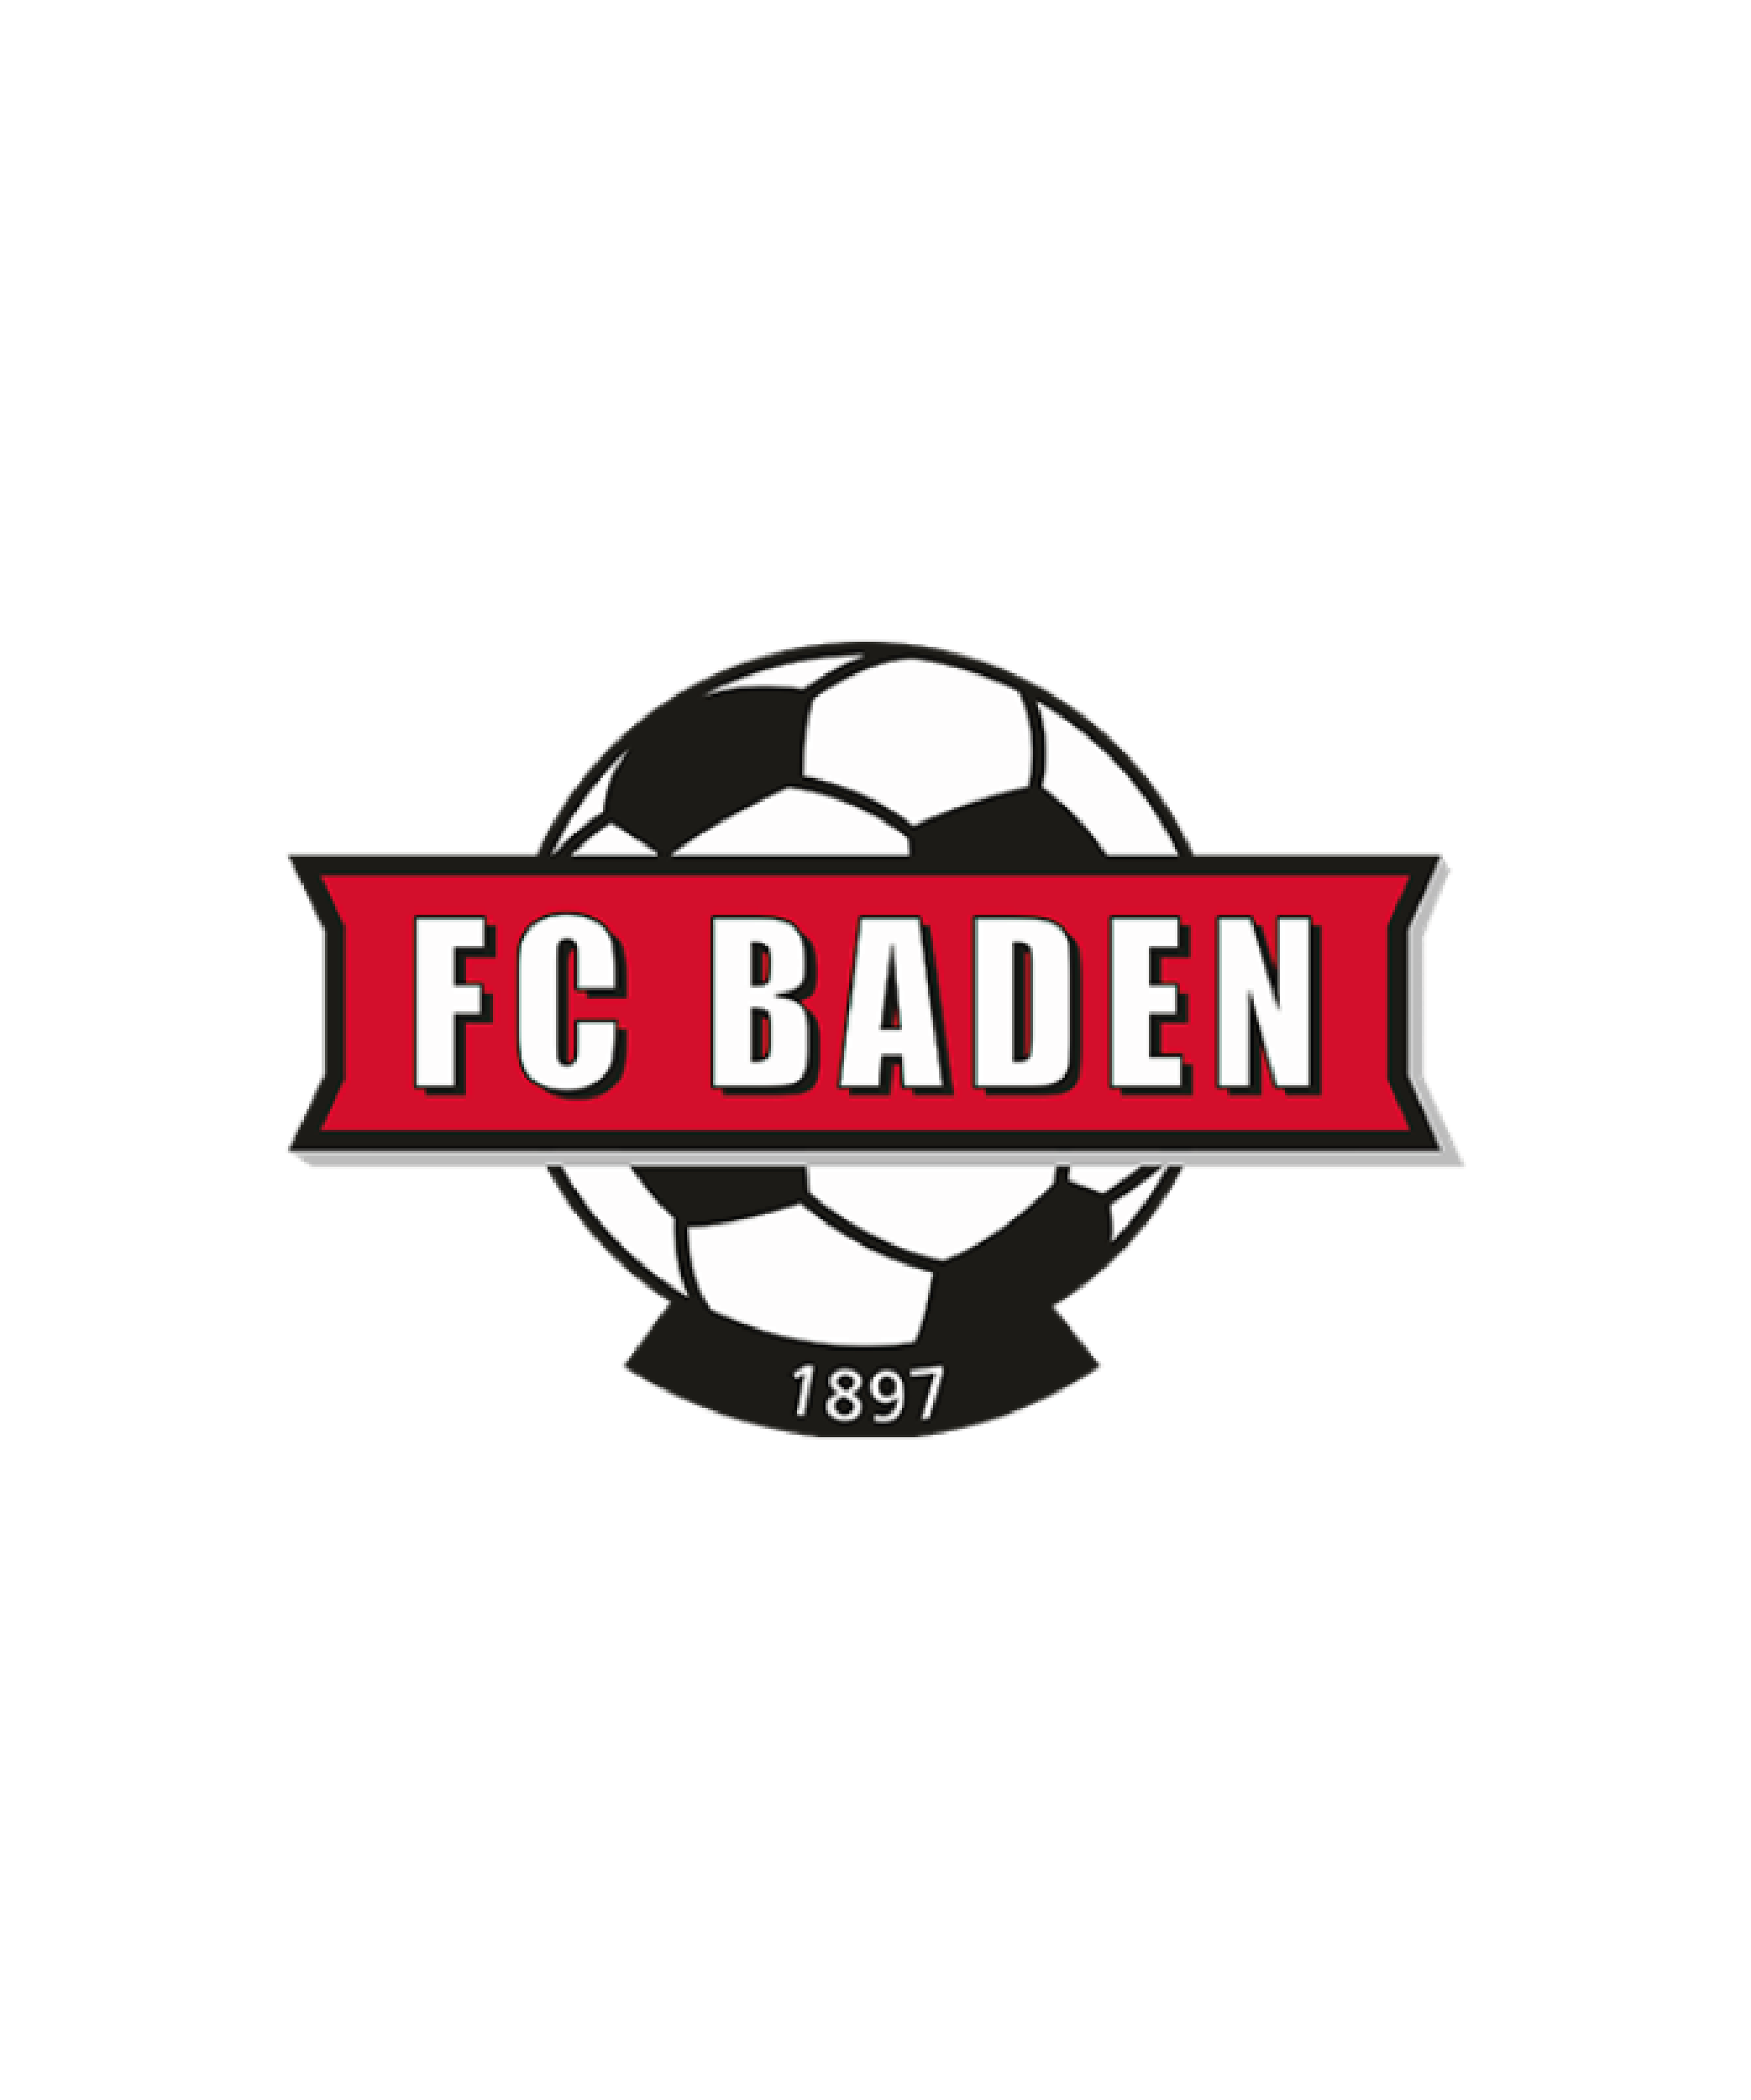 FC BADEN